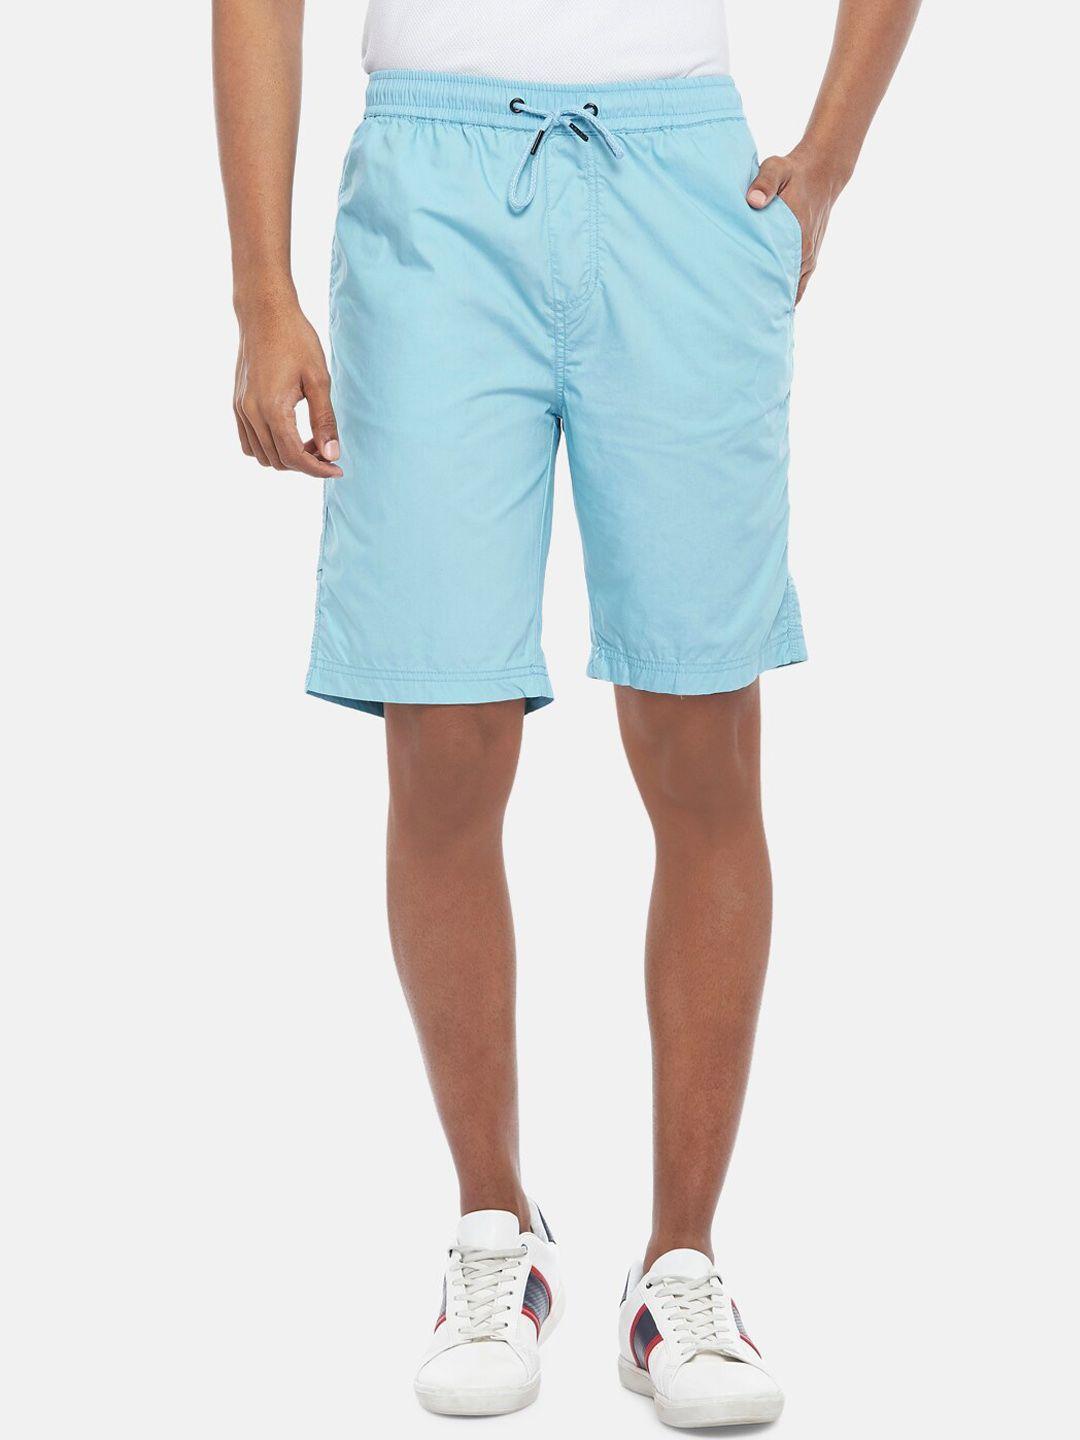 urban ranger by pantaloons men blue slim fit shorts